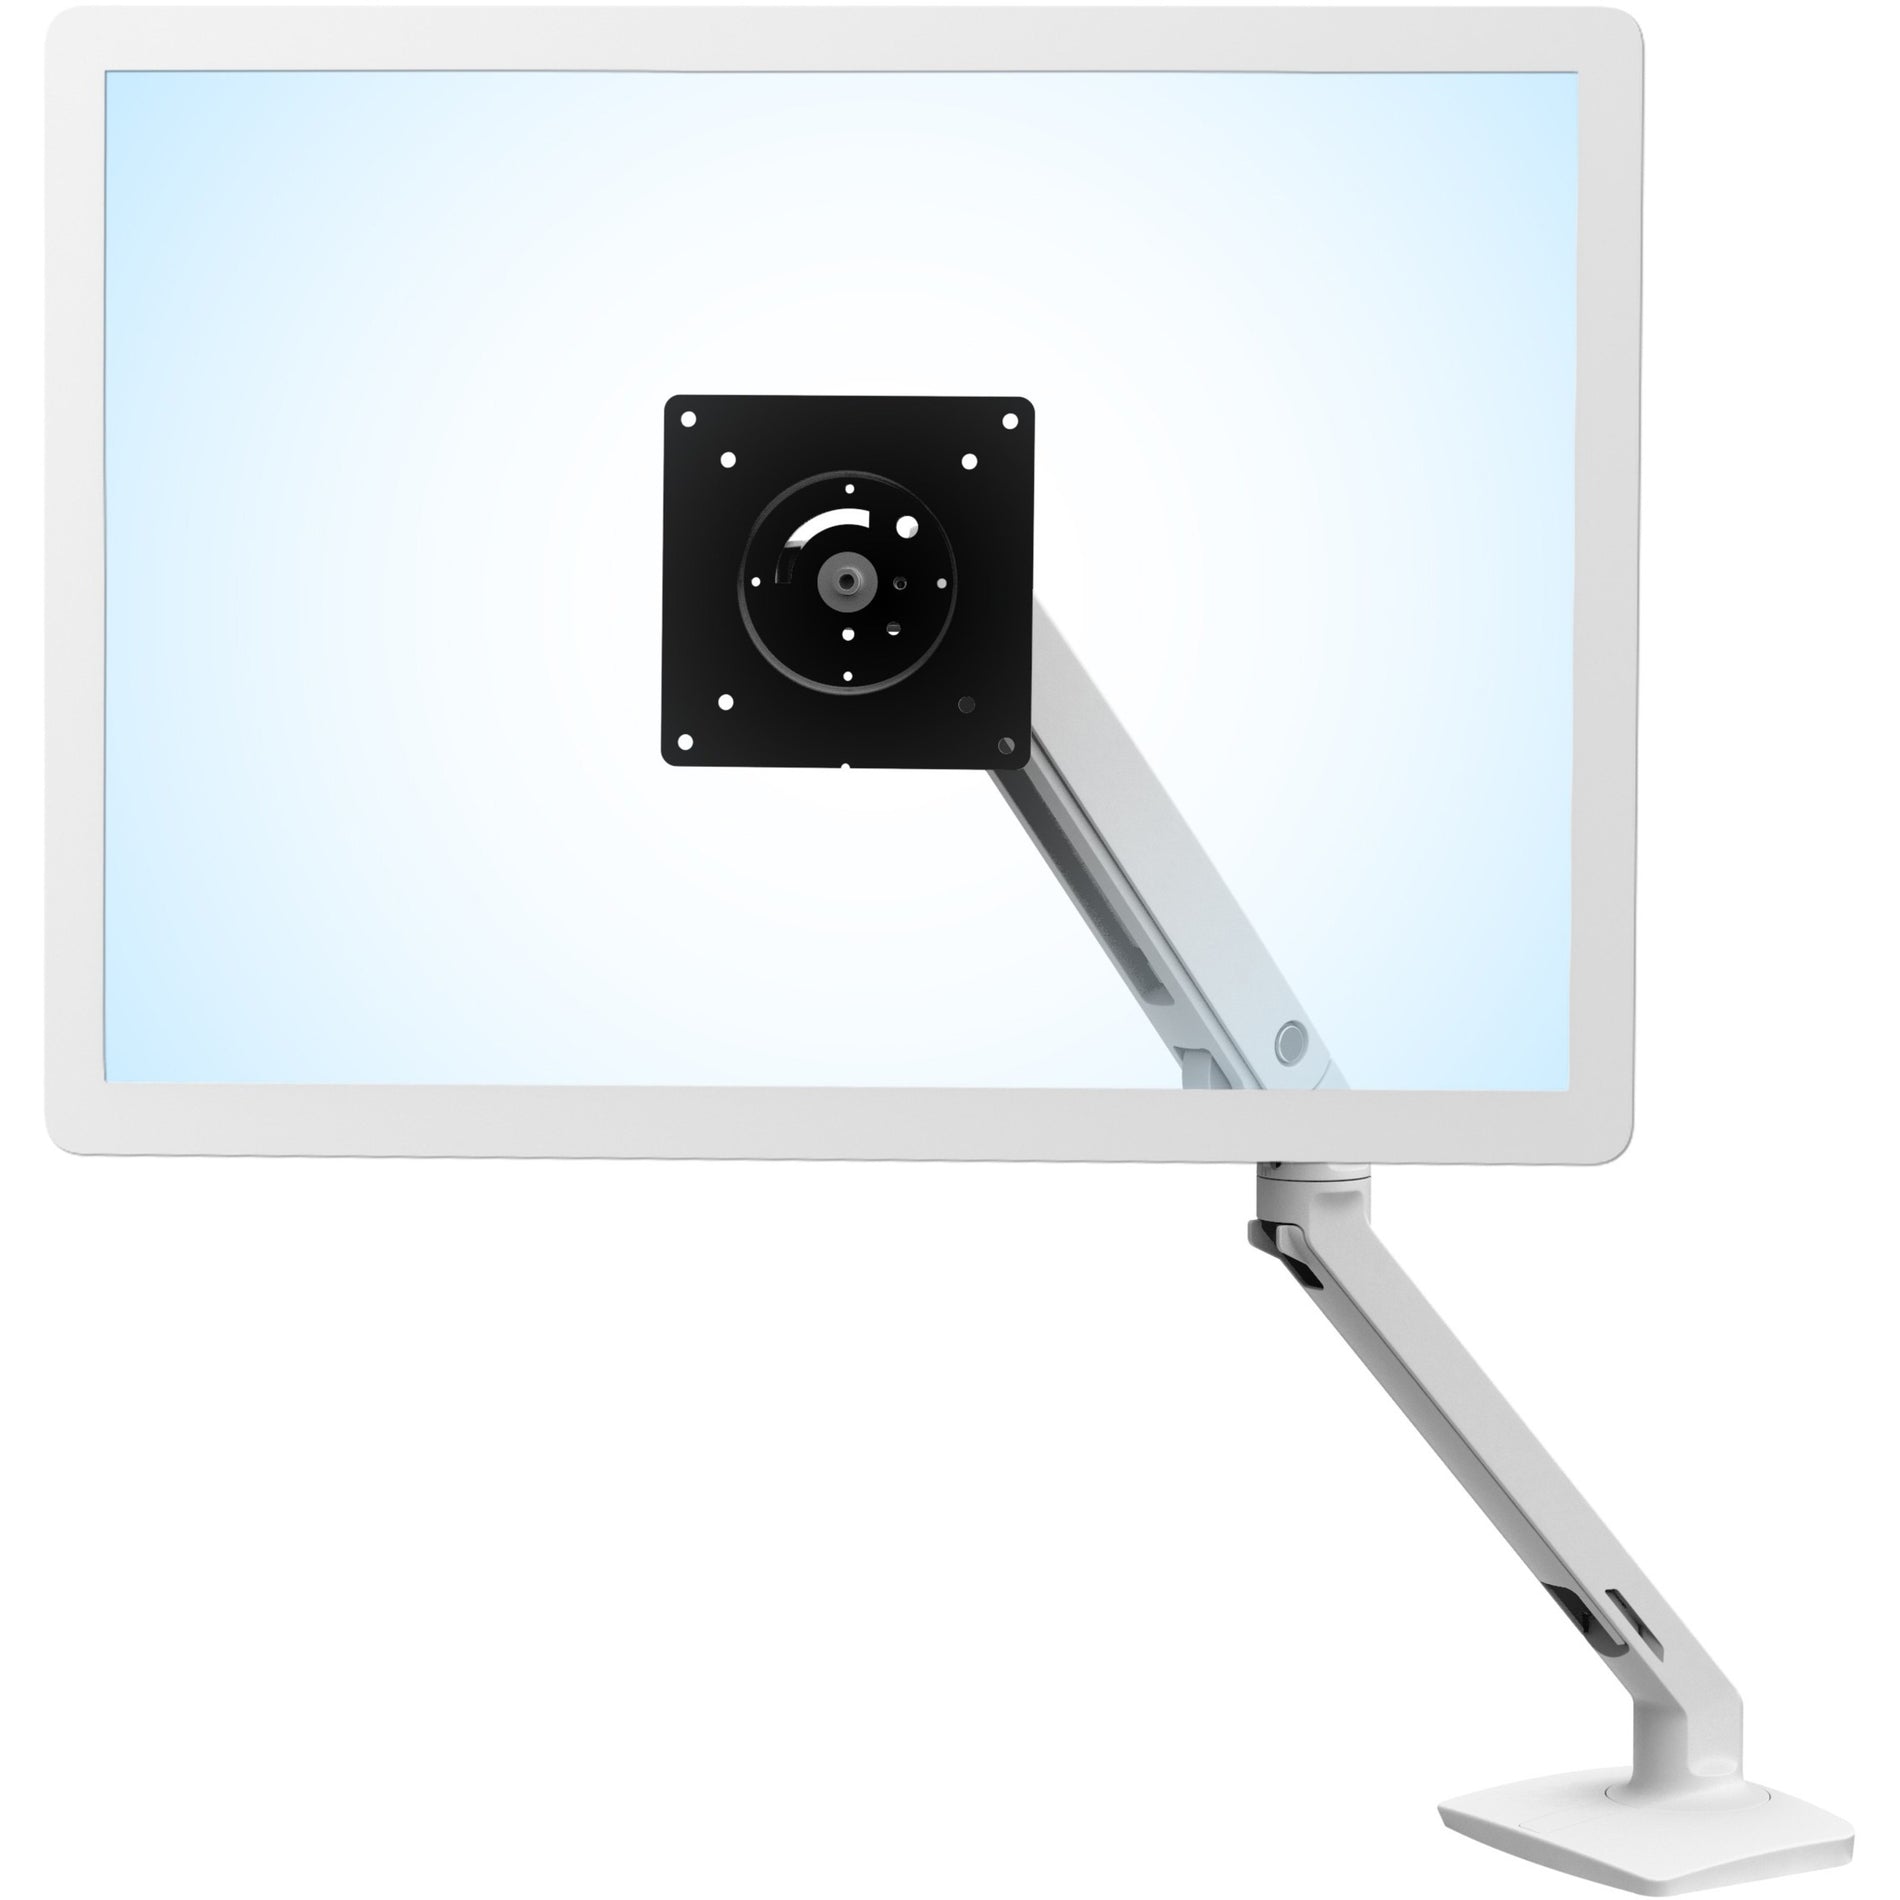 Ergotron 45-486-216 MXV Desk Monitor Arm (White) Mounting Arm for LCD Monitor, 20 lb Maximum Load Capacity